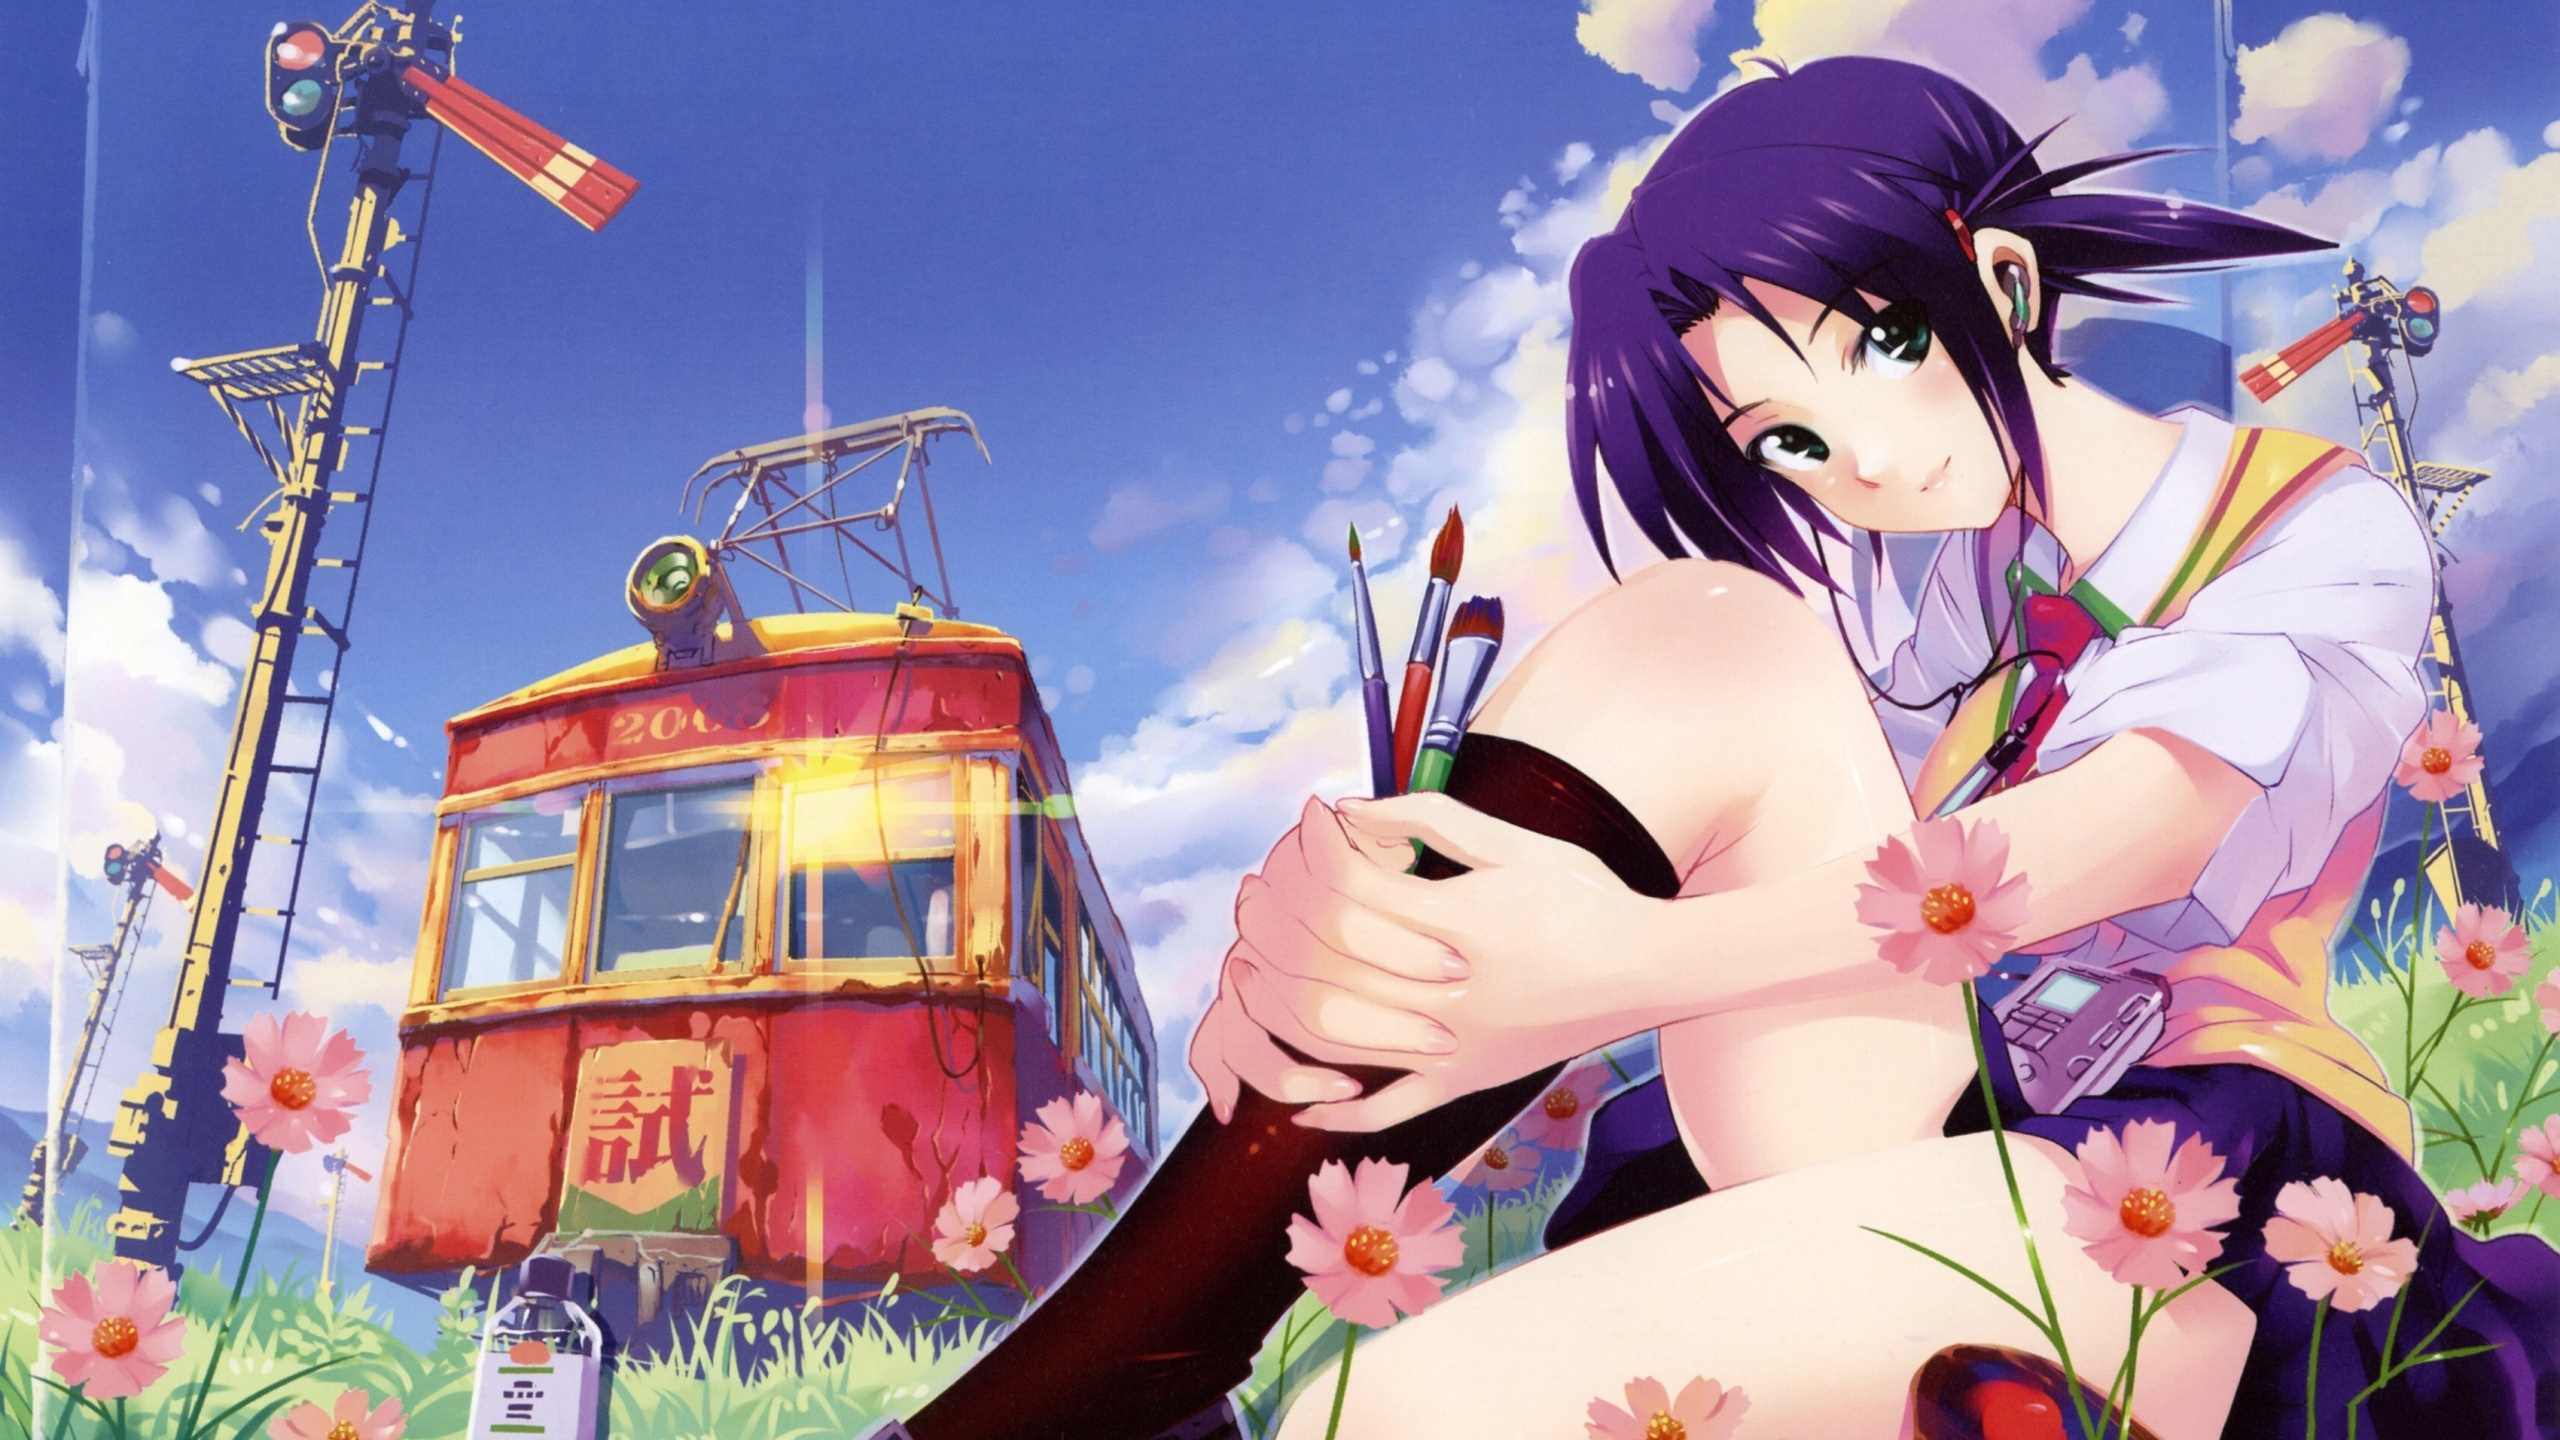 Anime School Girl Sitting on Grass Listening to Music